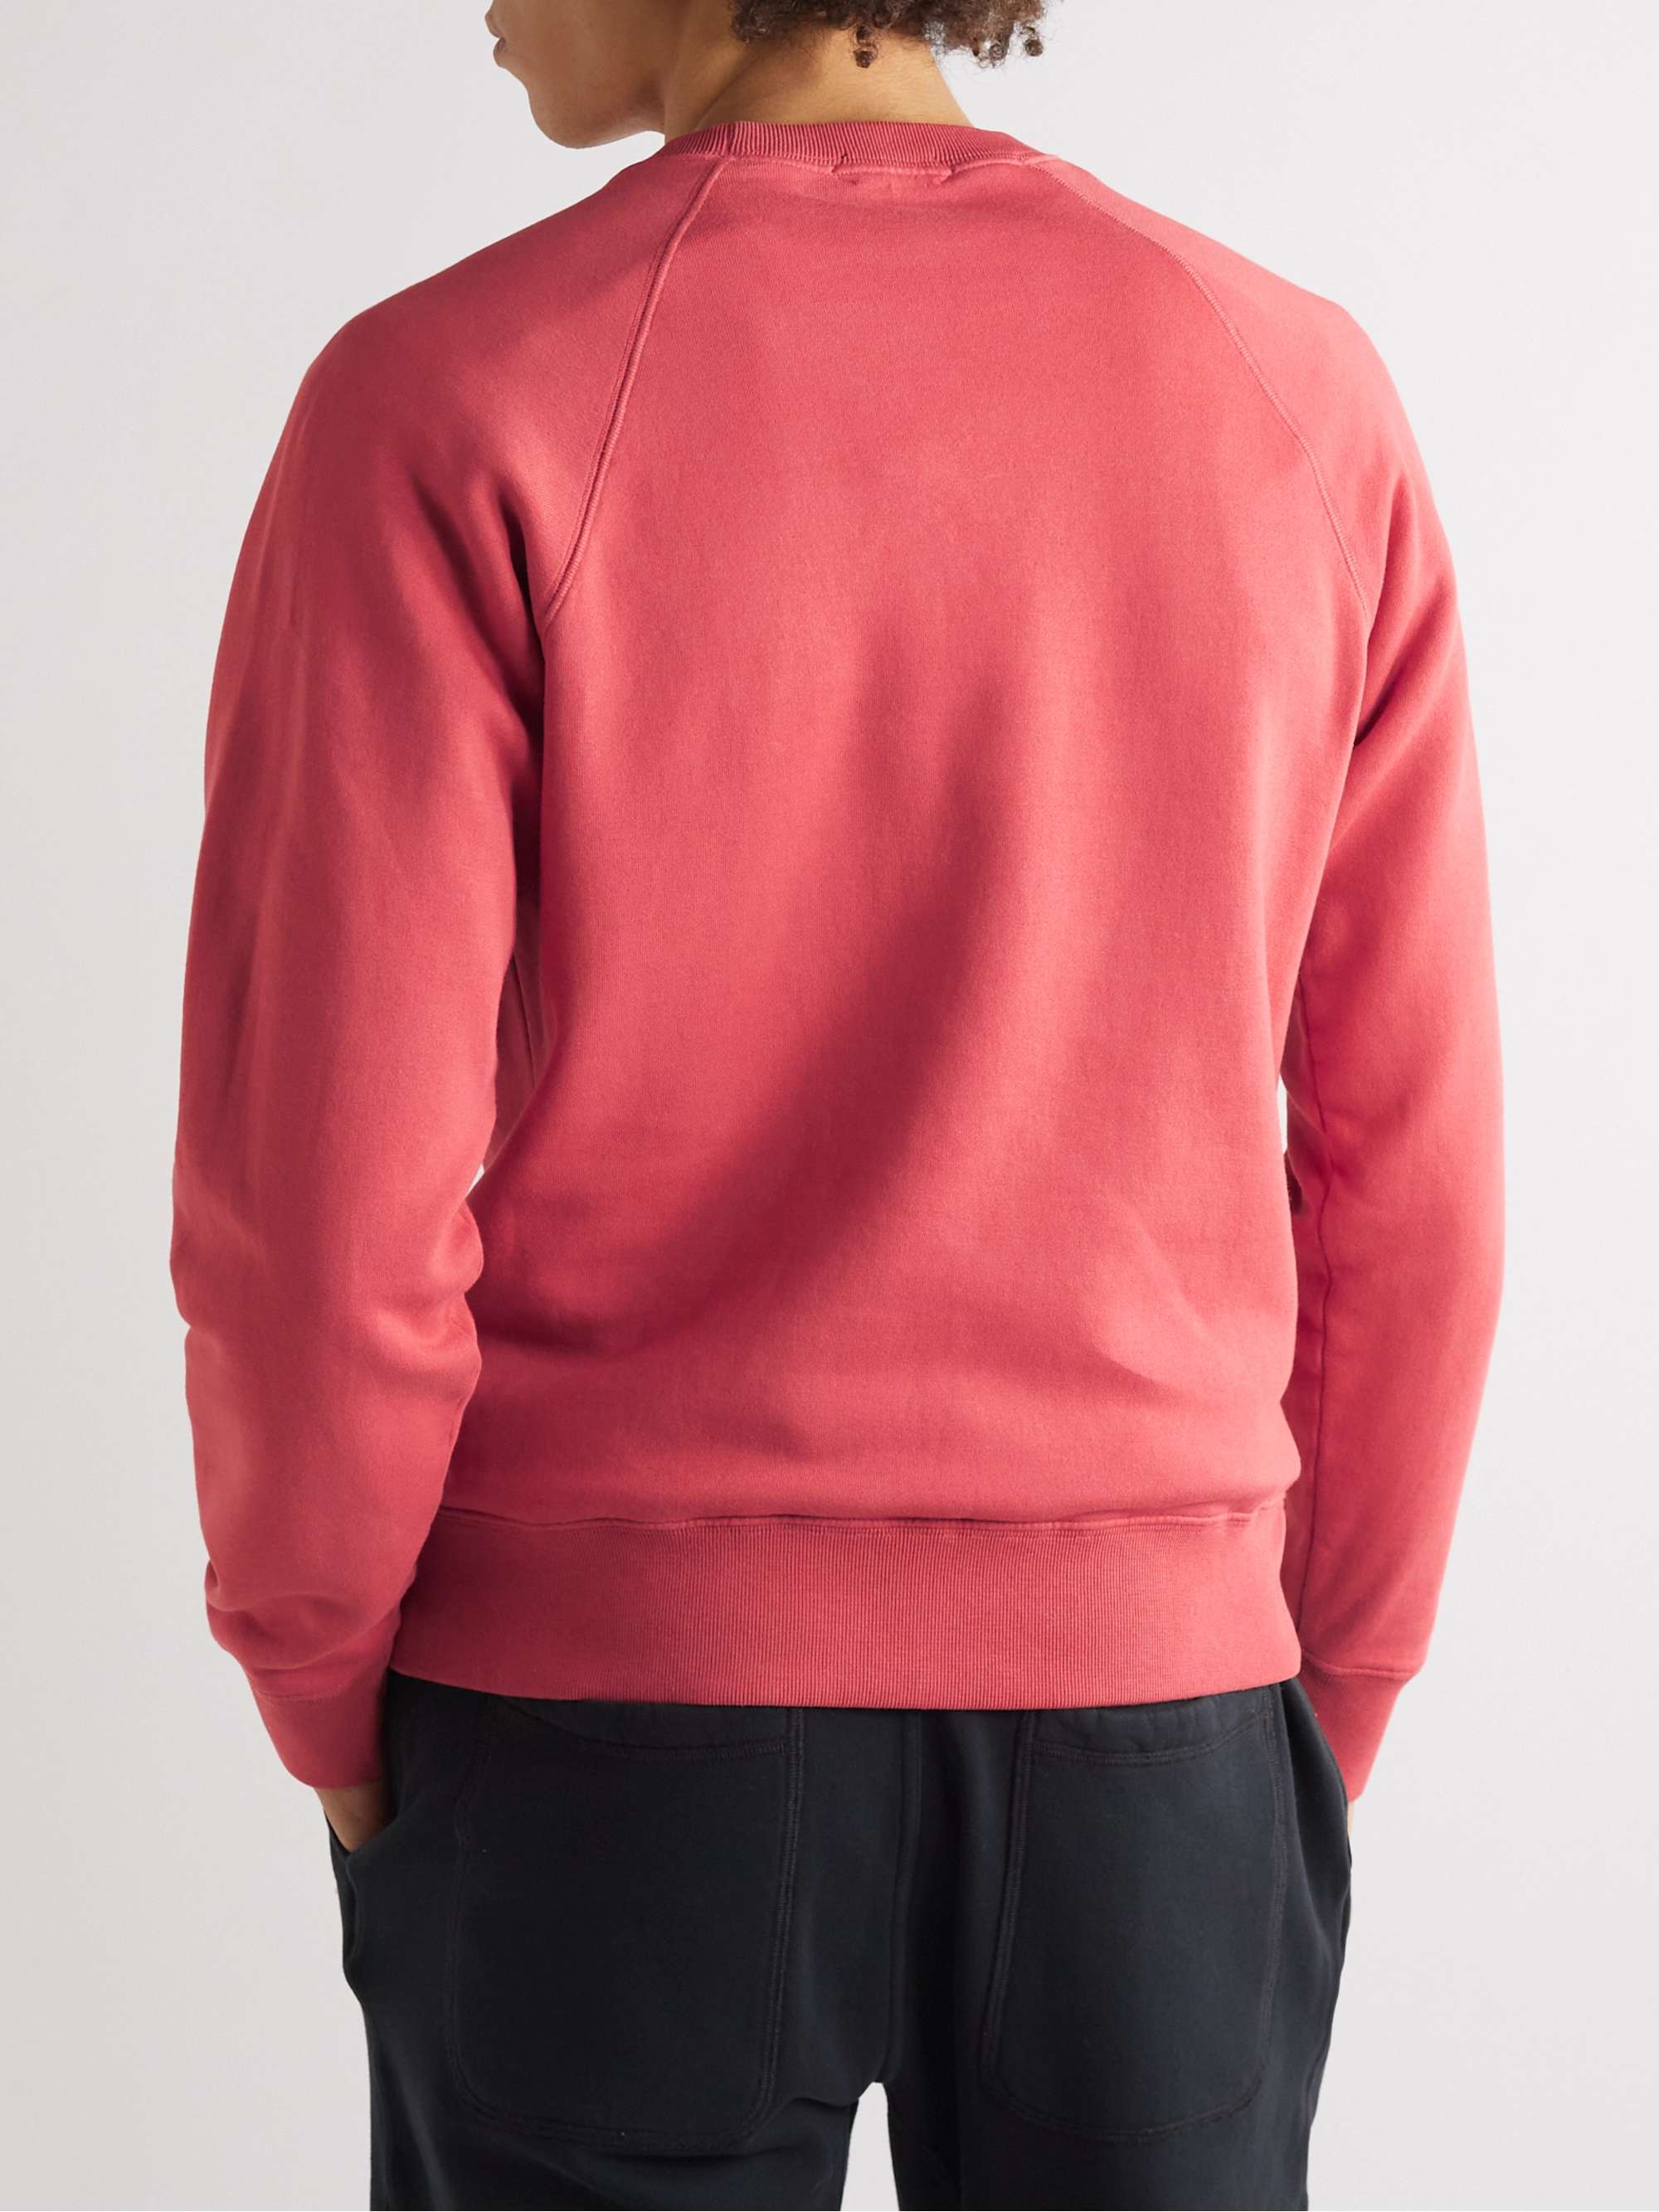 TOM FORD Garment-Dyed Cotton-Jersey Sweatshirt